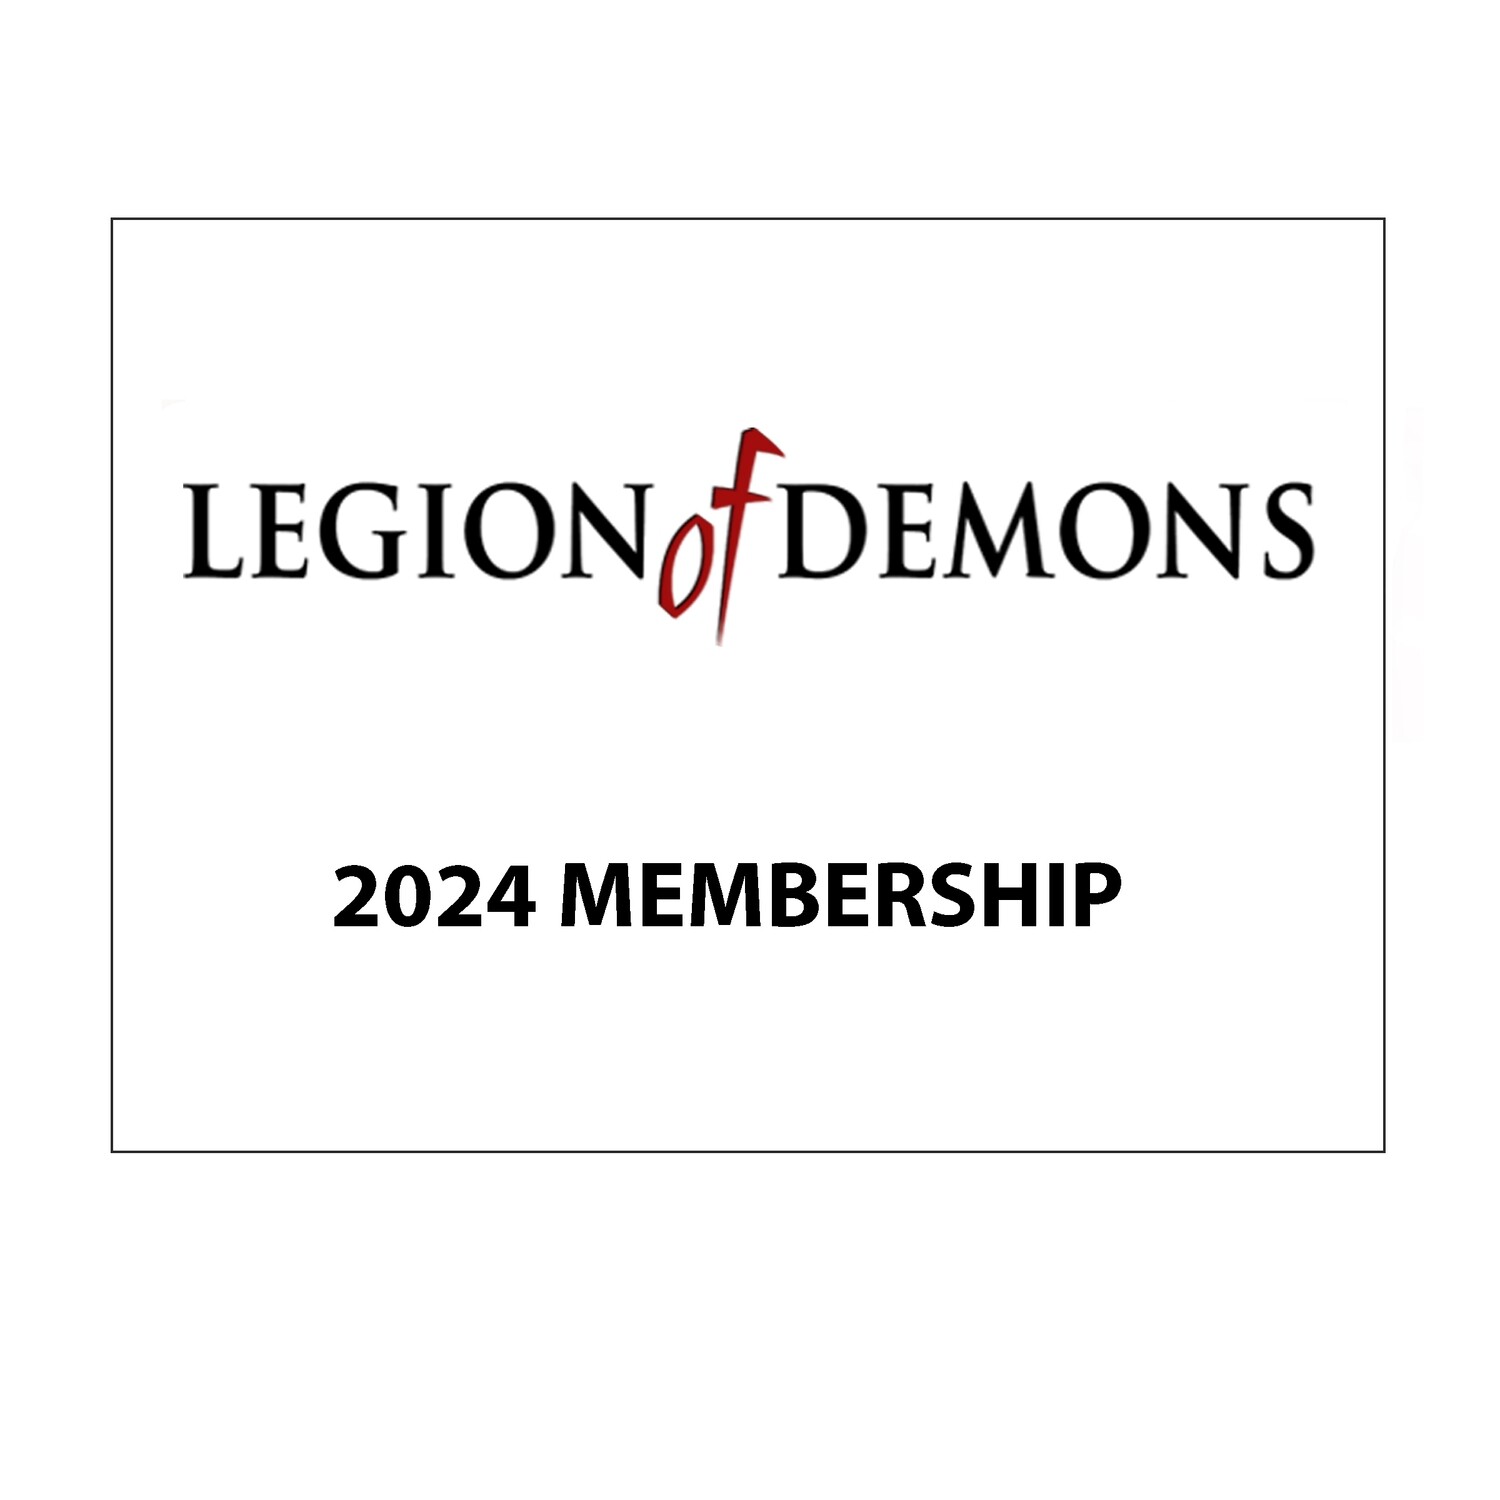 LEGION OF DEMONS 2024 MEMBERSHIP